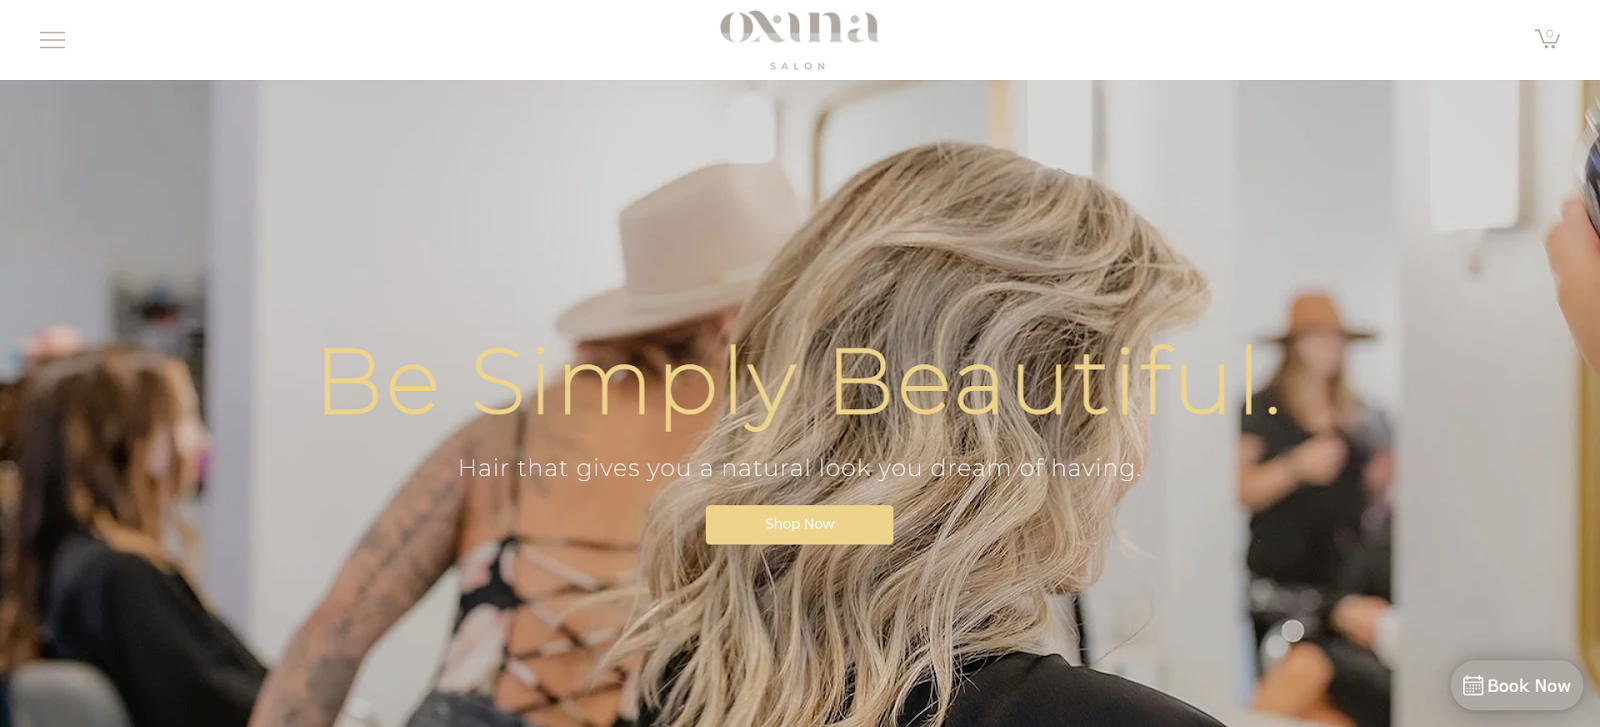 hair salon website, Oxana Salon